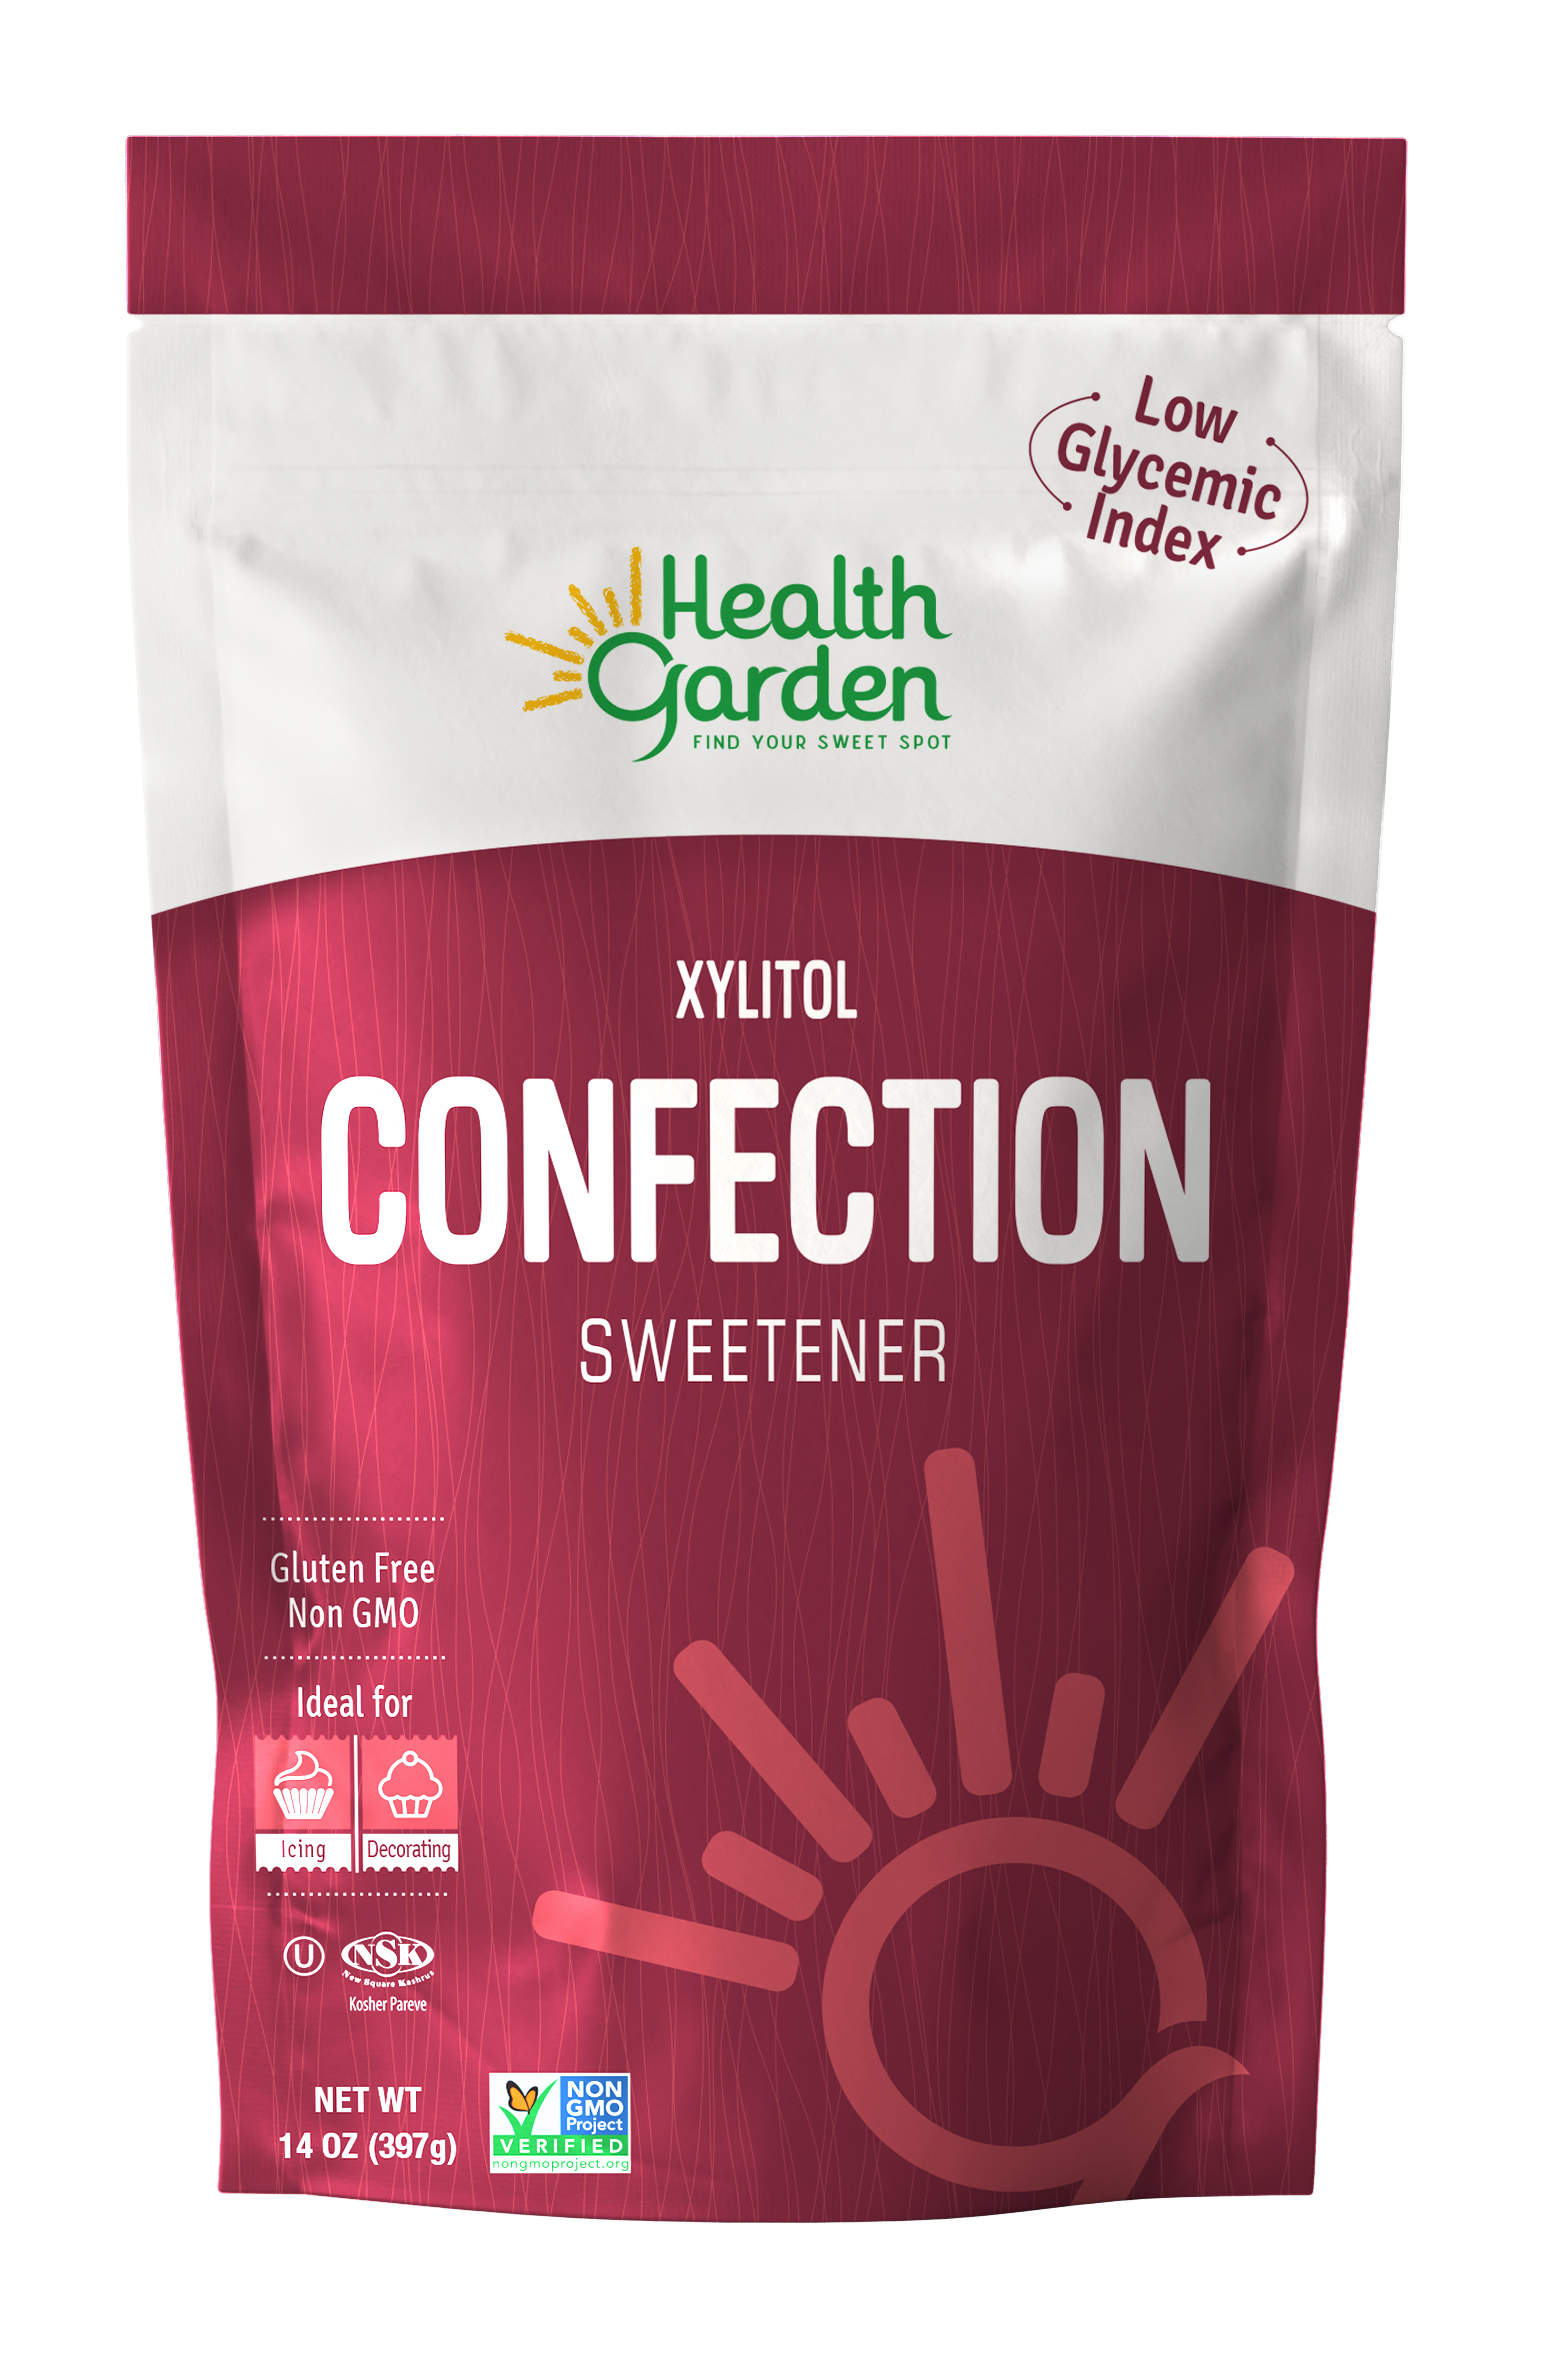 Health Garden Xylitol Confection Sweetener 12 units per case 14.0 oz